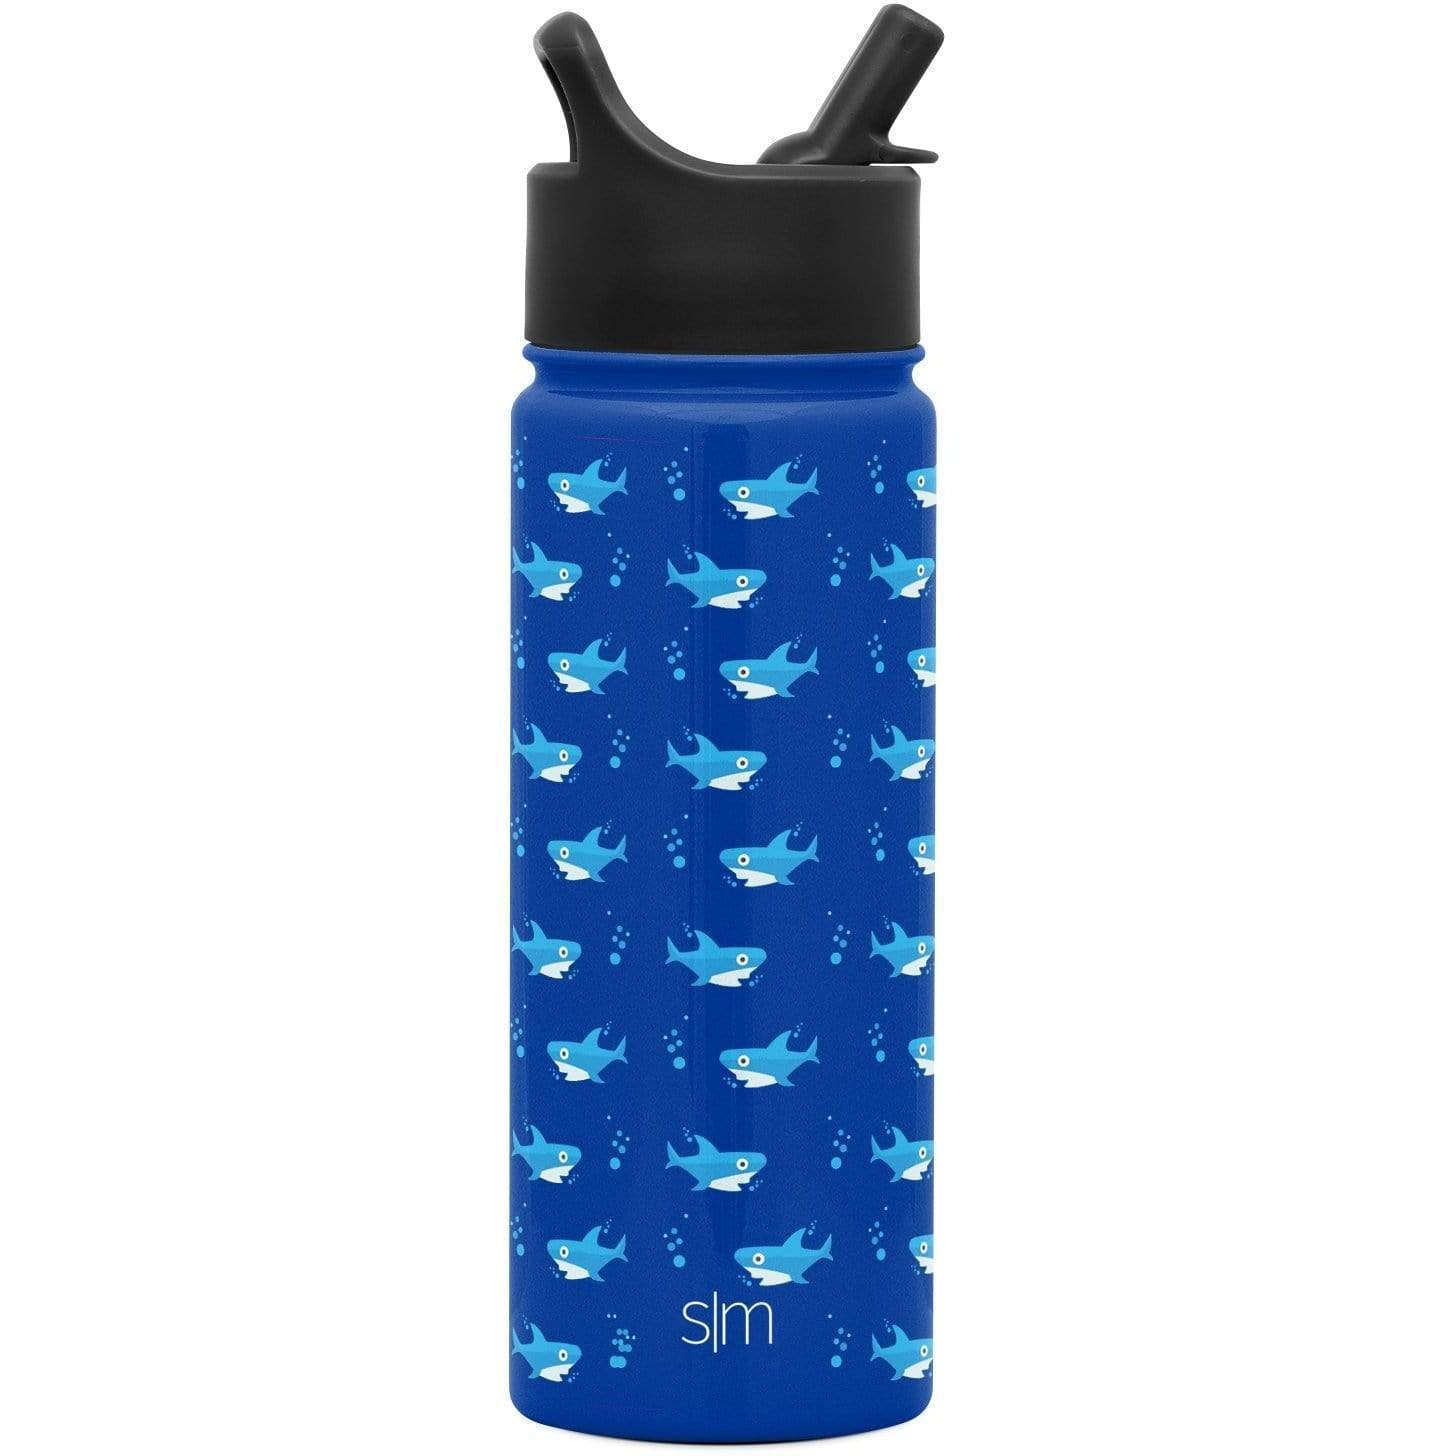 Summit Water Bottle - 18oz